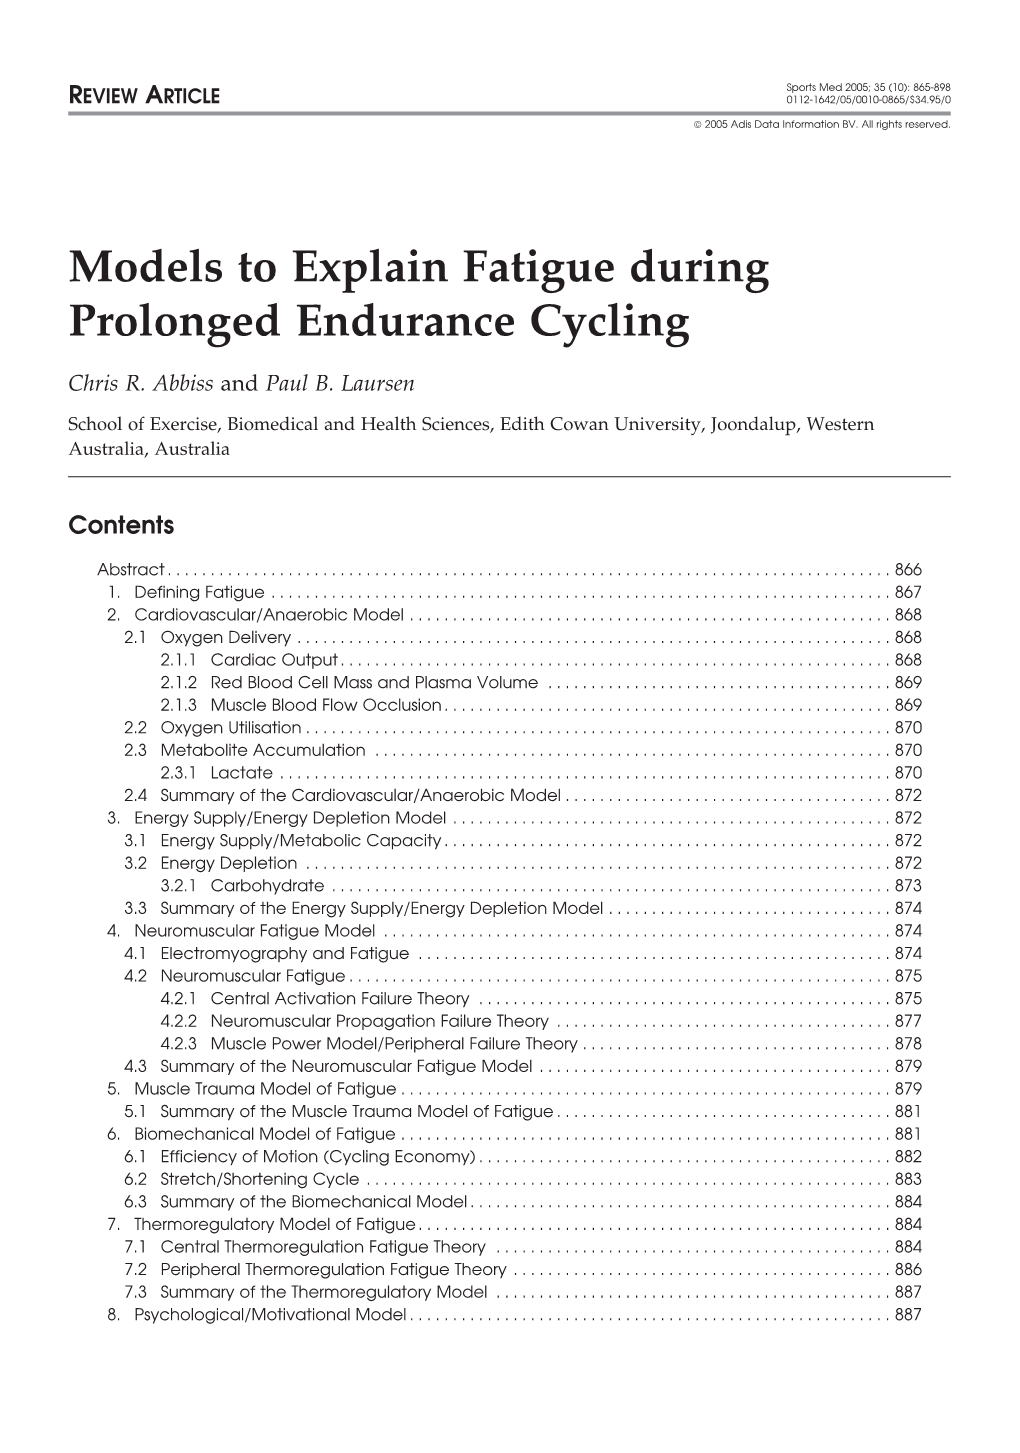 Models to Explain Fatigue During Prolonged Endurance Cycling